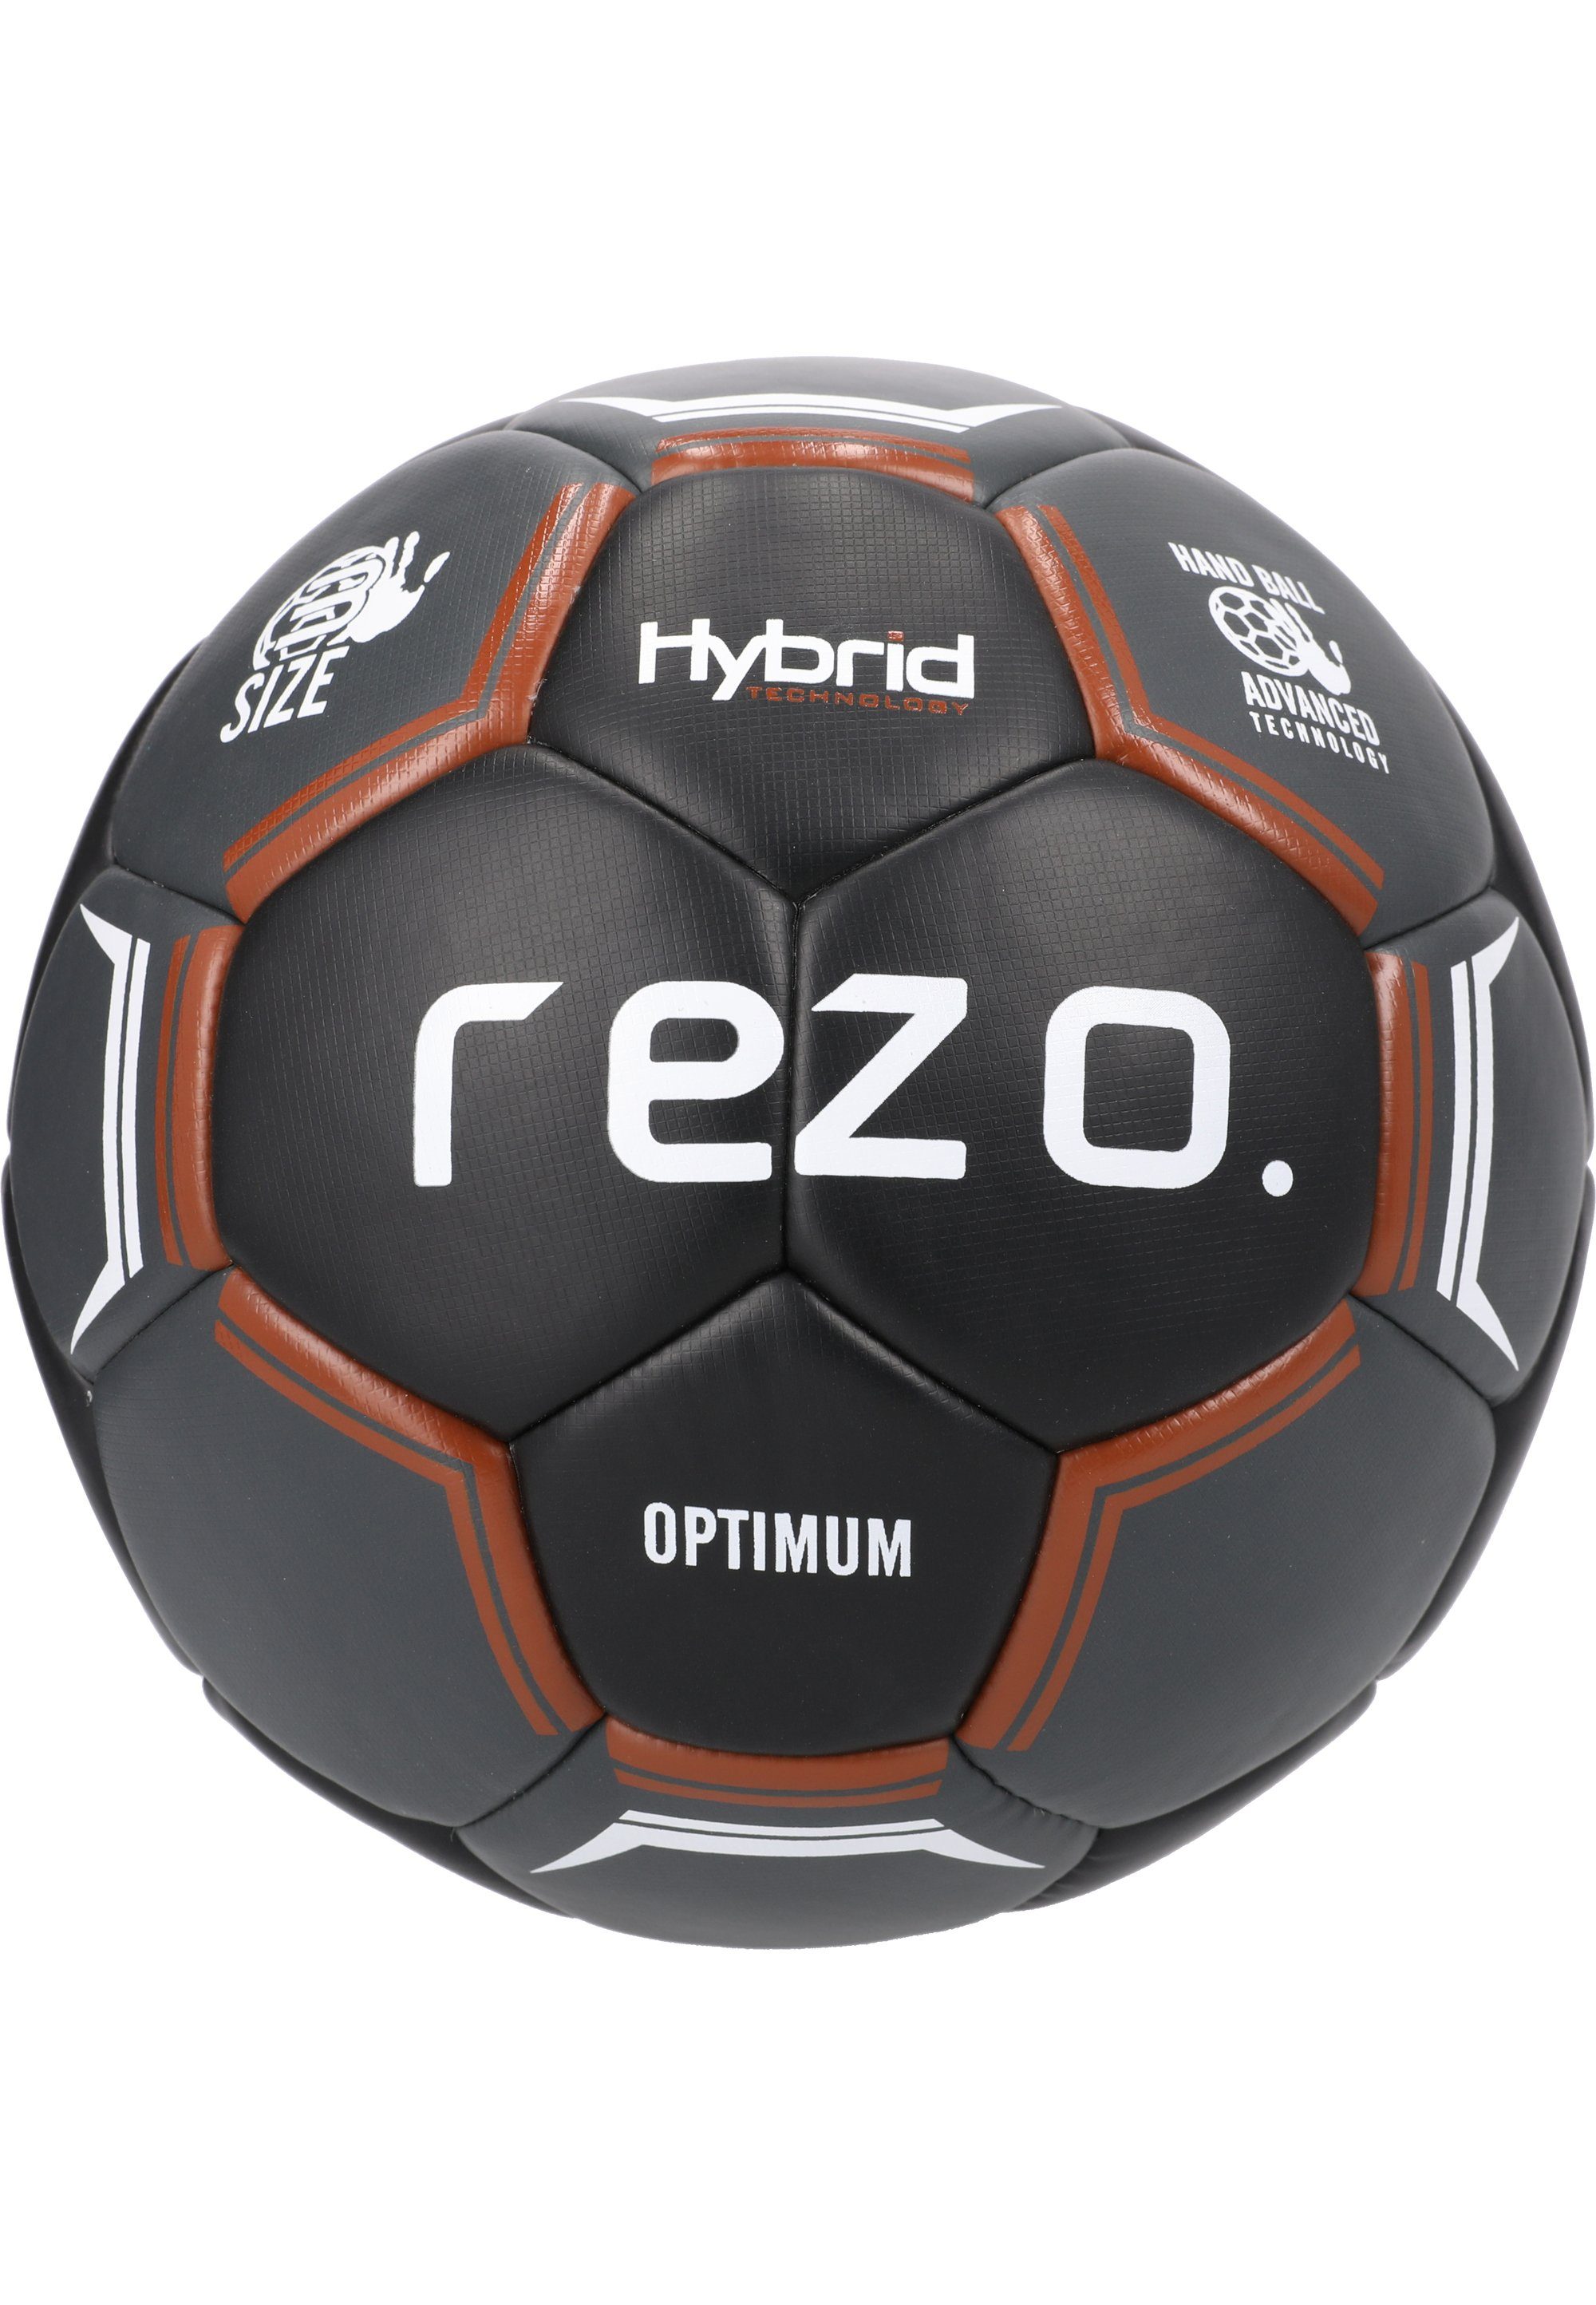 mit griffiger Handball Oberfläche Optimum, Rezo